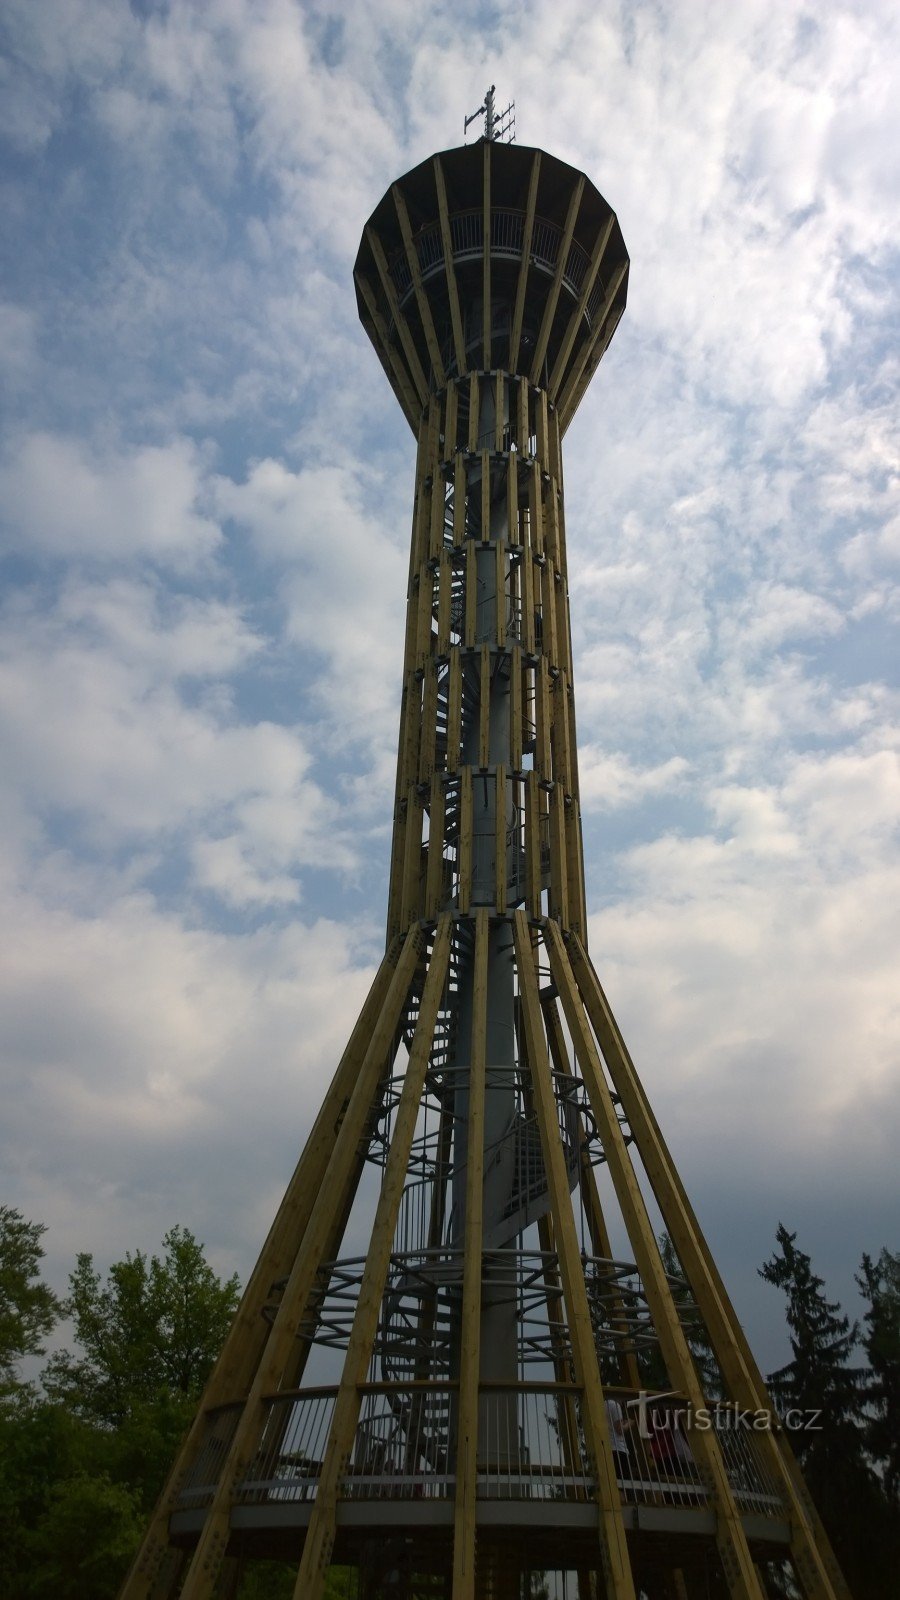 Lbosín 附近的 Špulka 瞭望塔